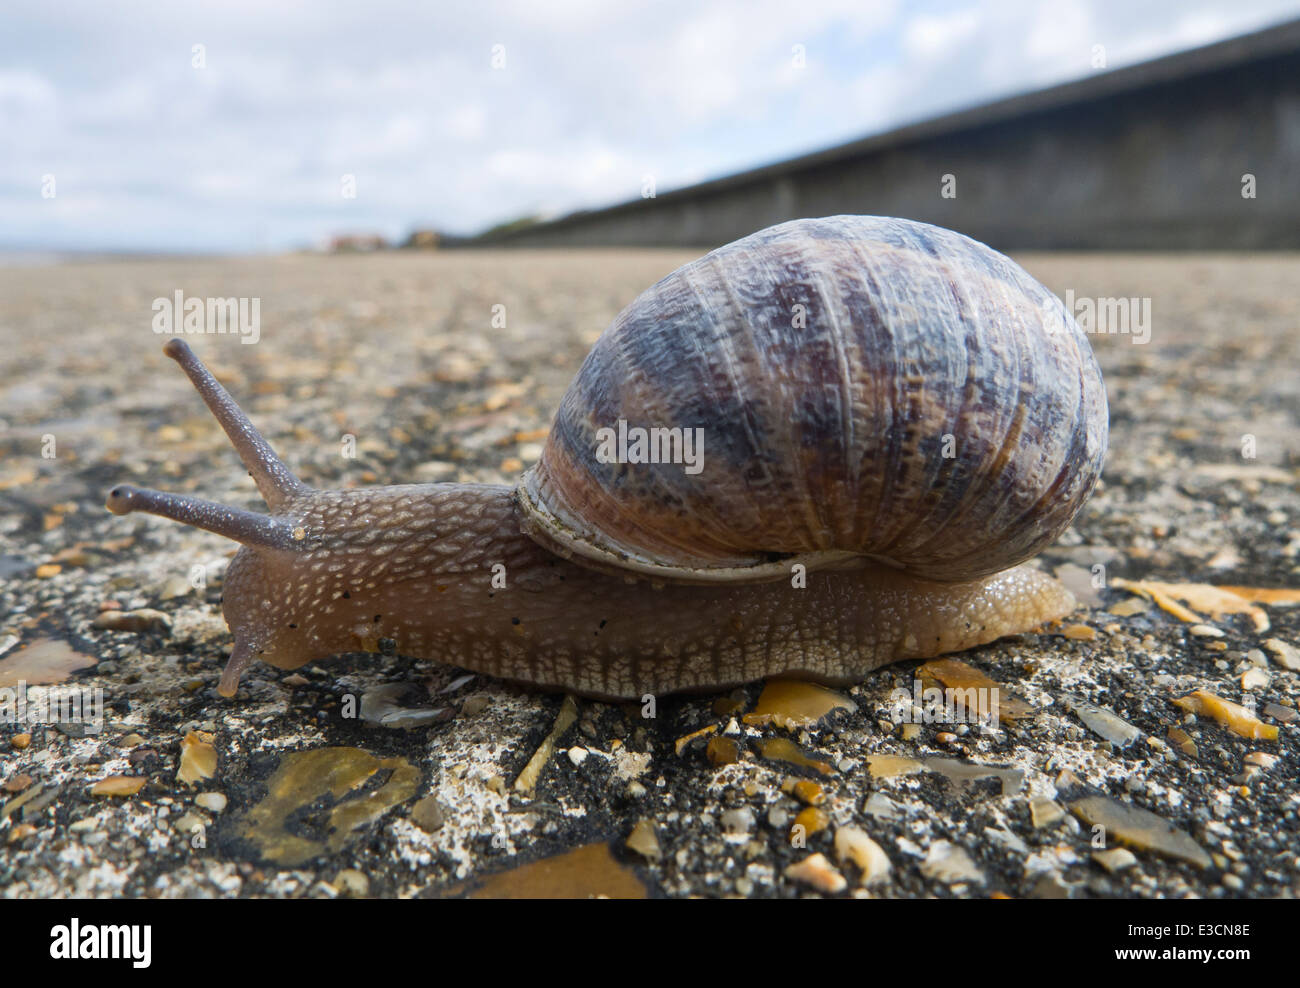 Snail moving across a concrete surface. Stock Photo